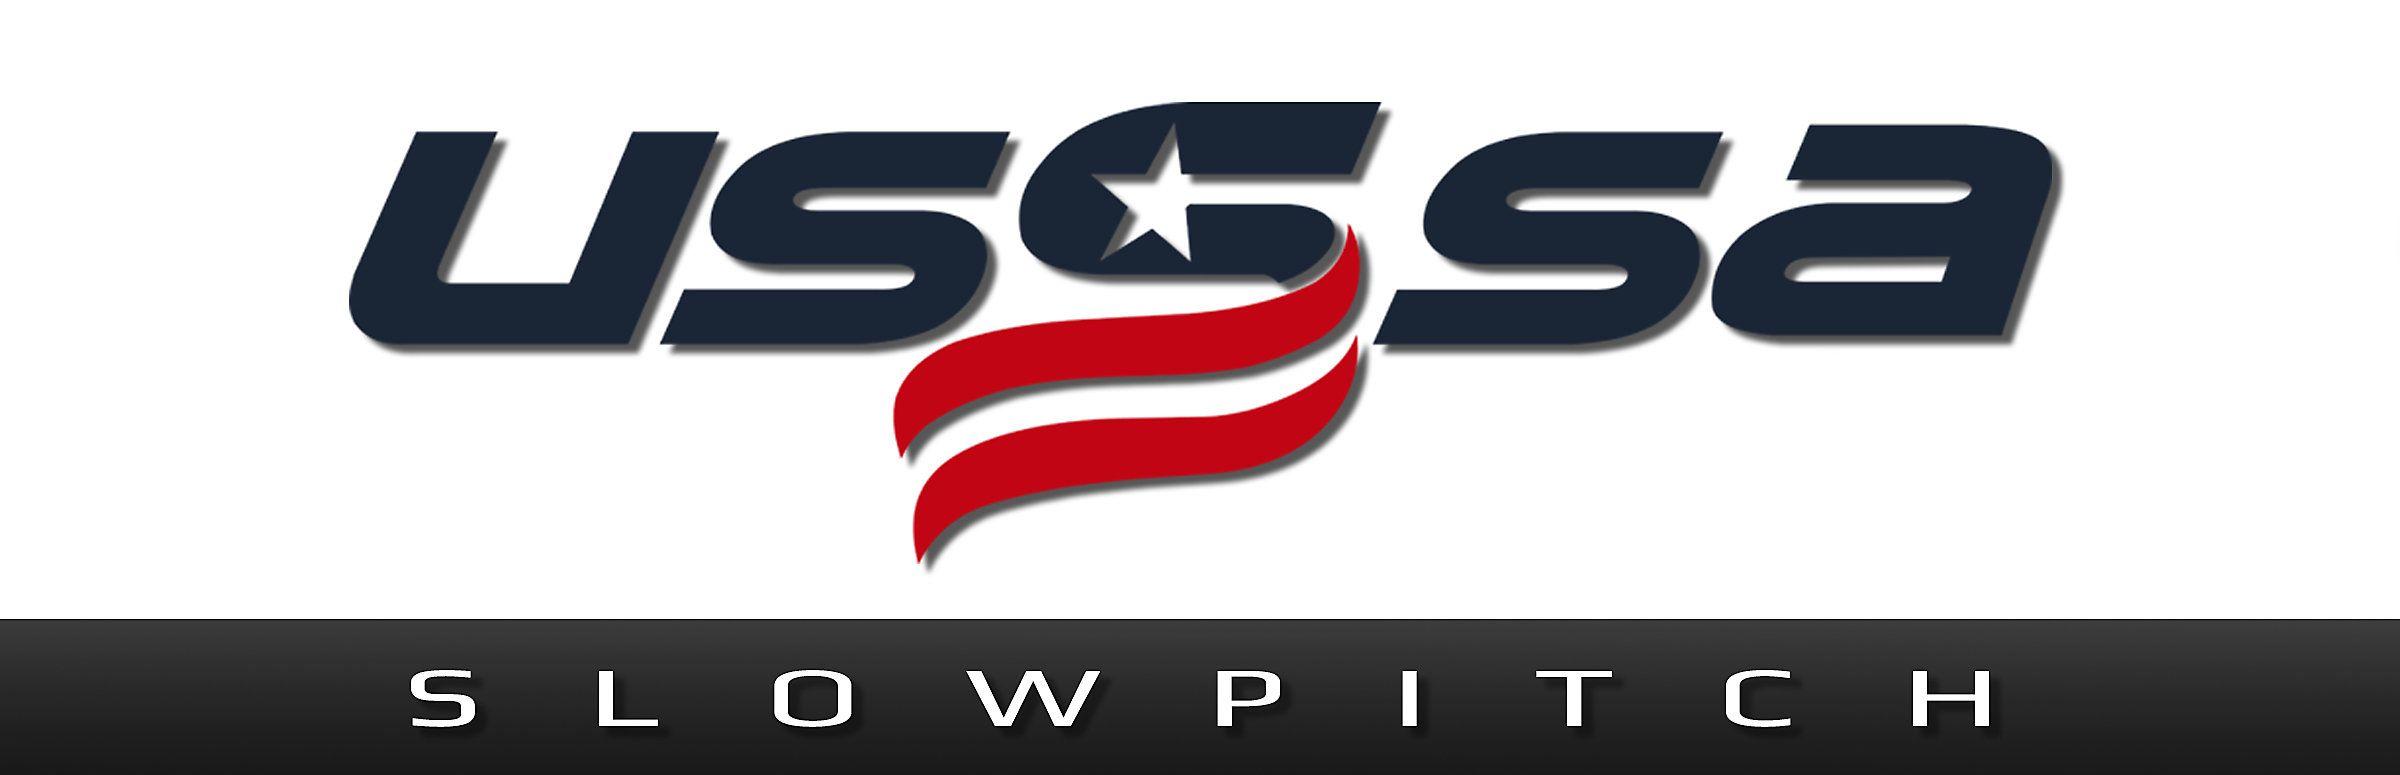 Slow Pitch Softball Logo - USSSA Slowpitch Umpire Gear: Shop Softball Umpire Gear | Boombah